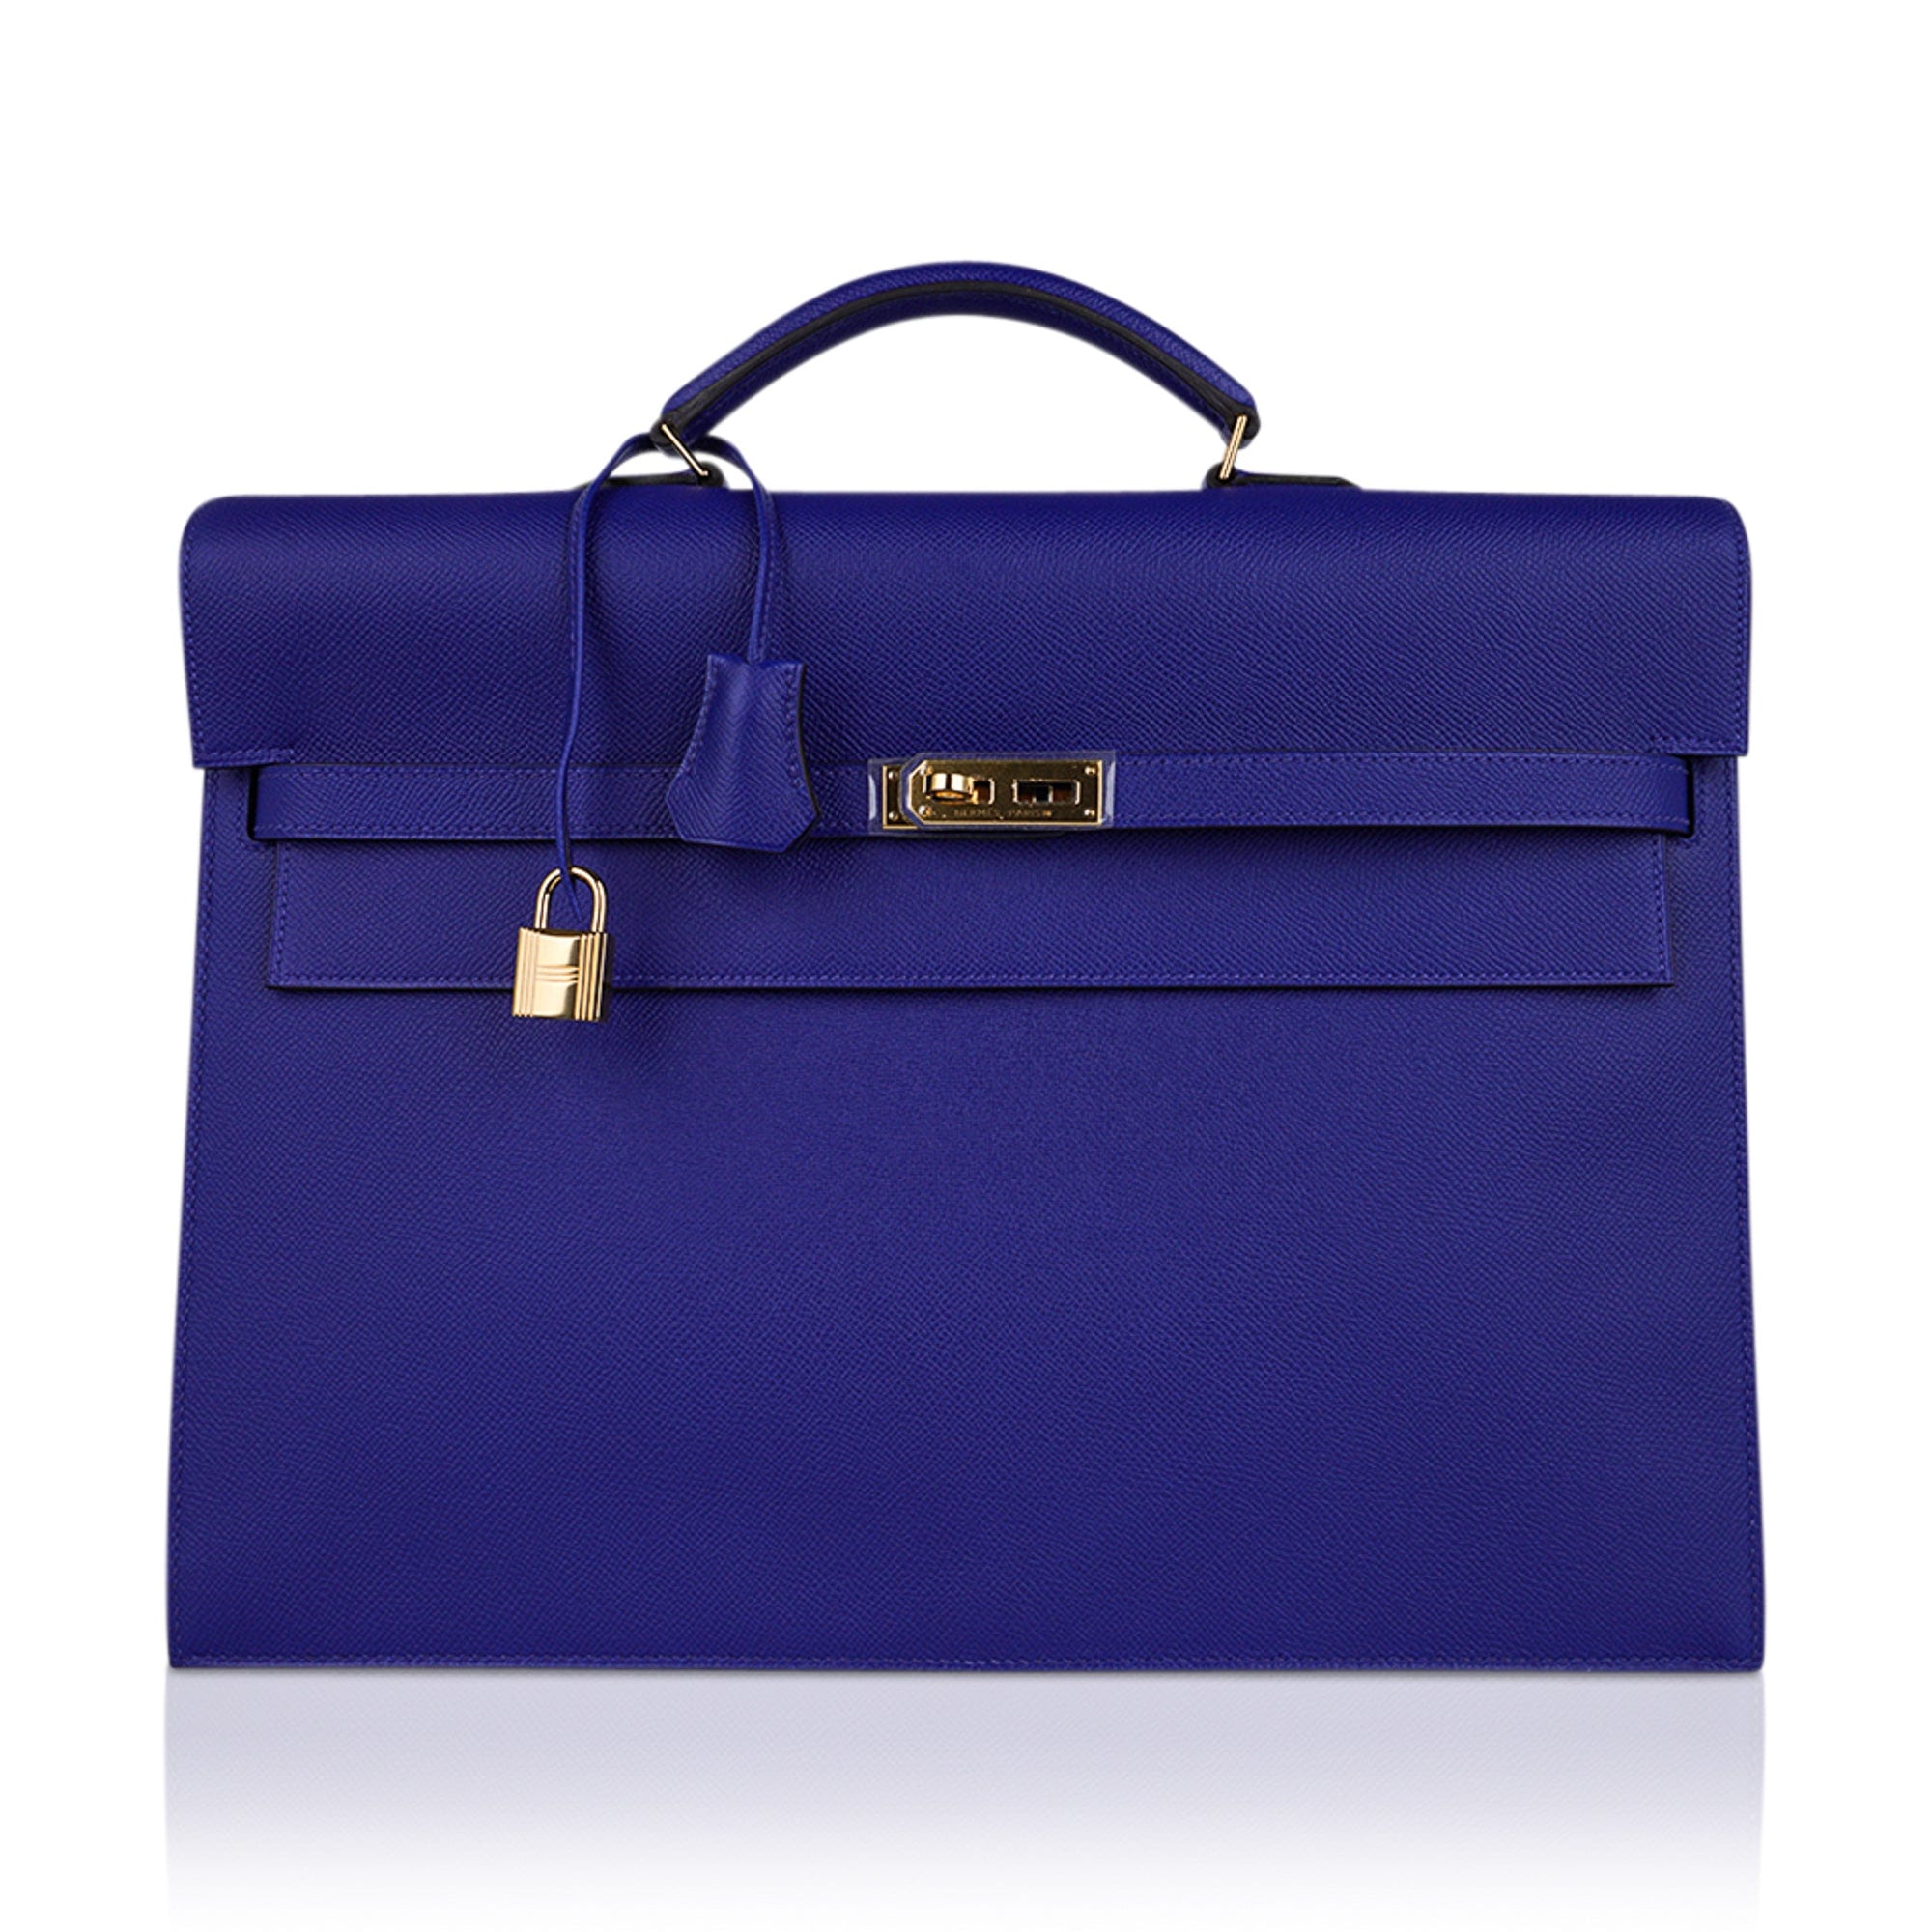 REAL LEATHER BAG trendy Handbag purple Leather Briefcase Bag 